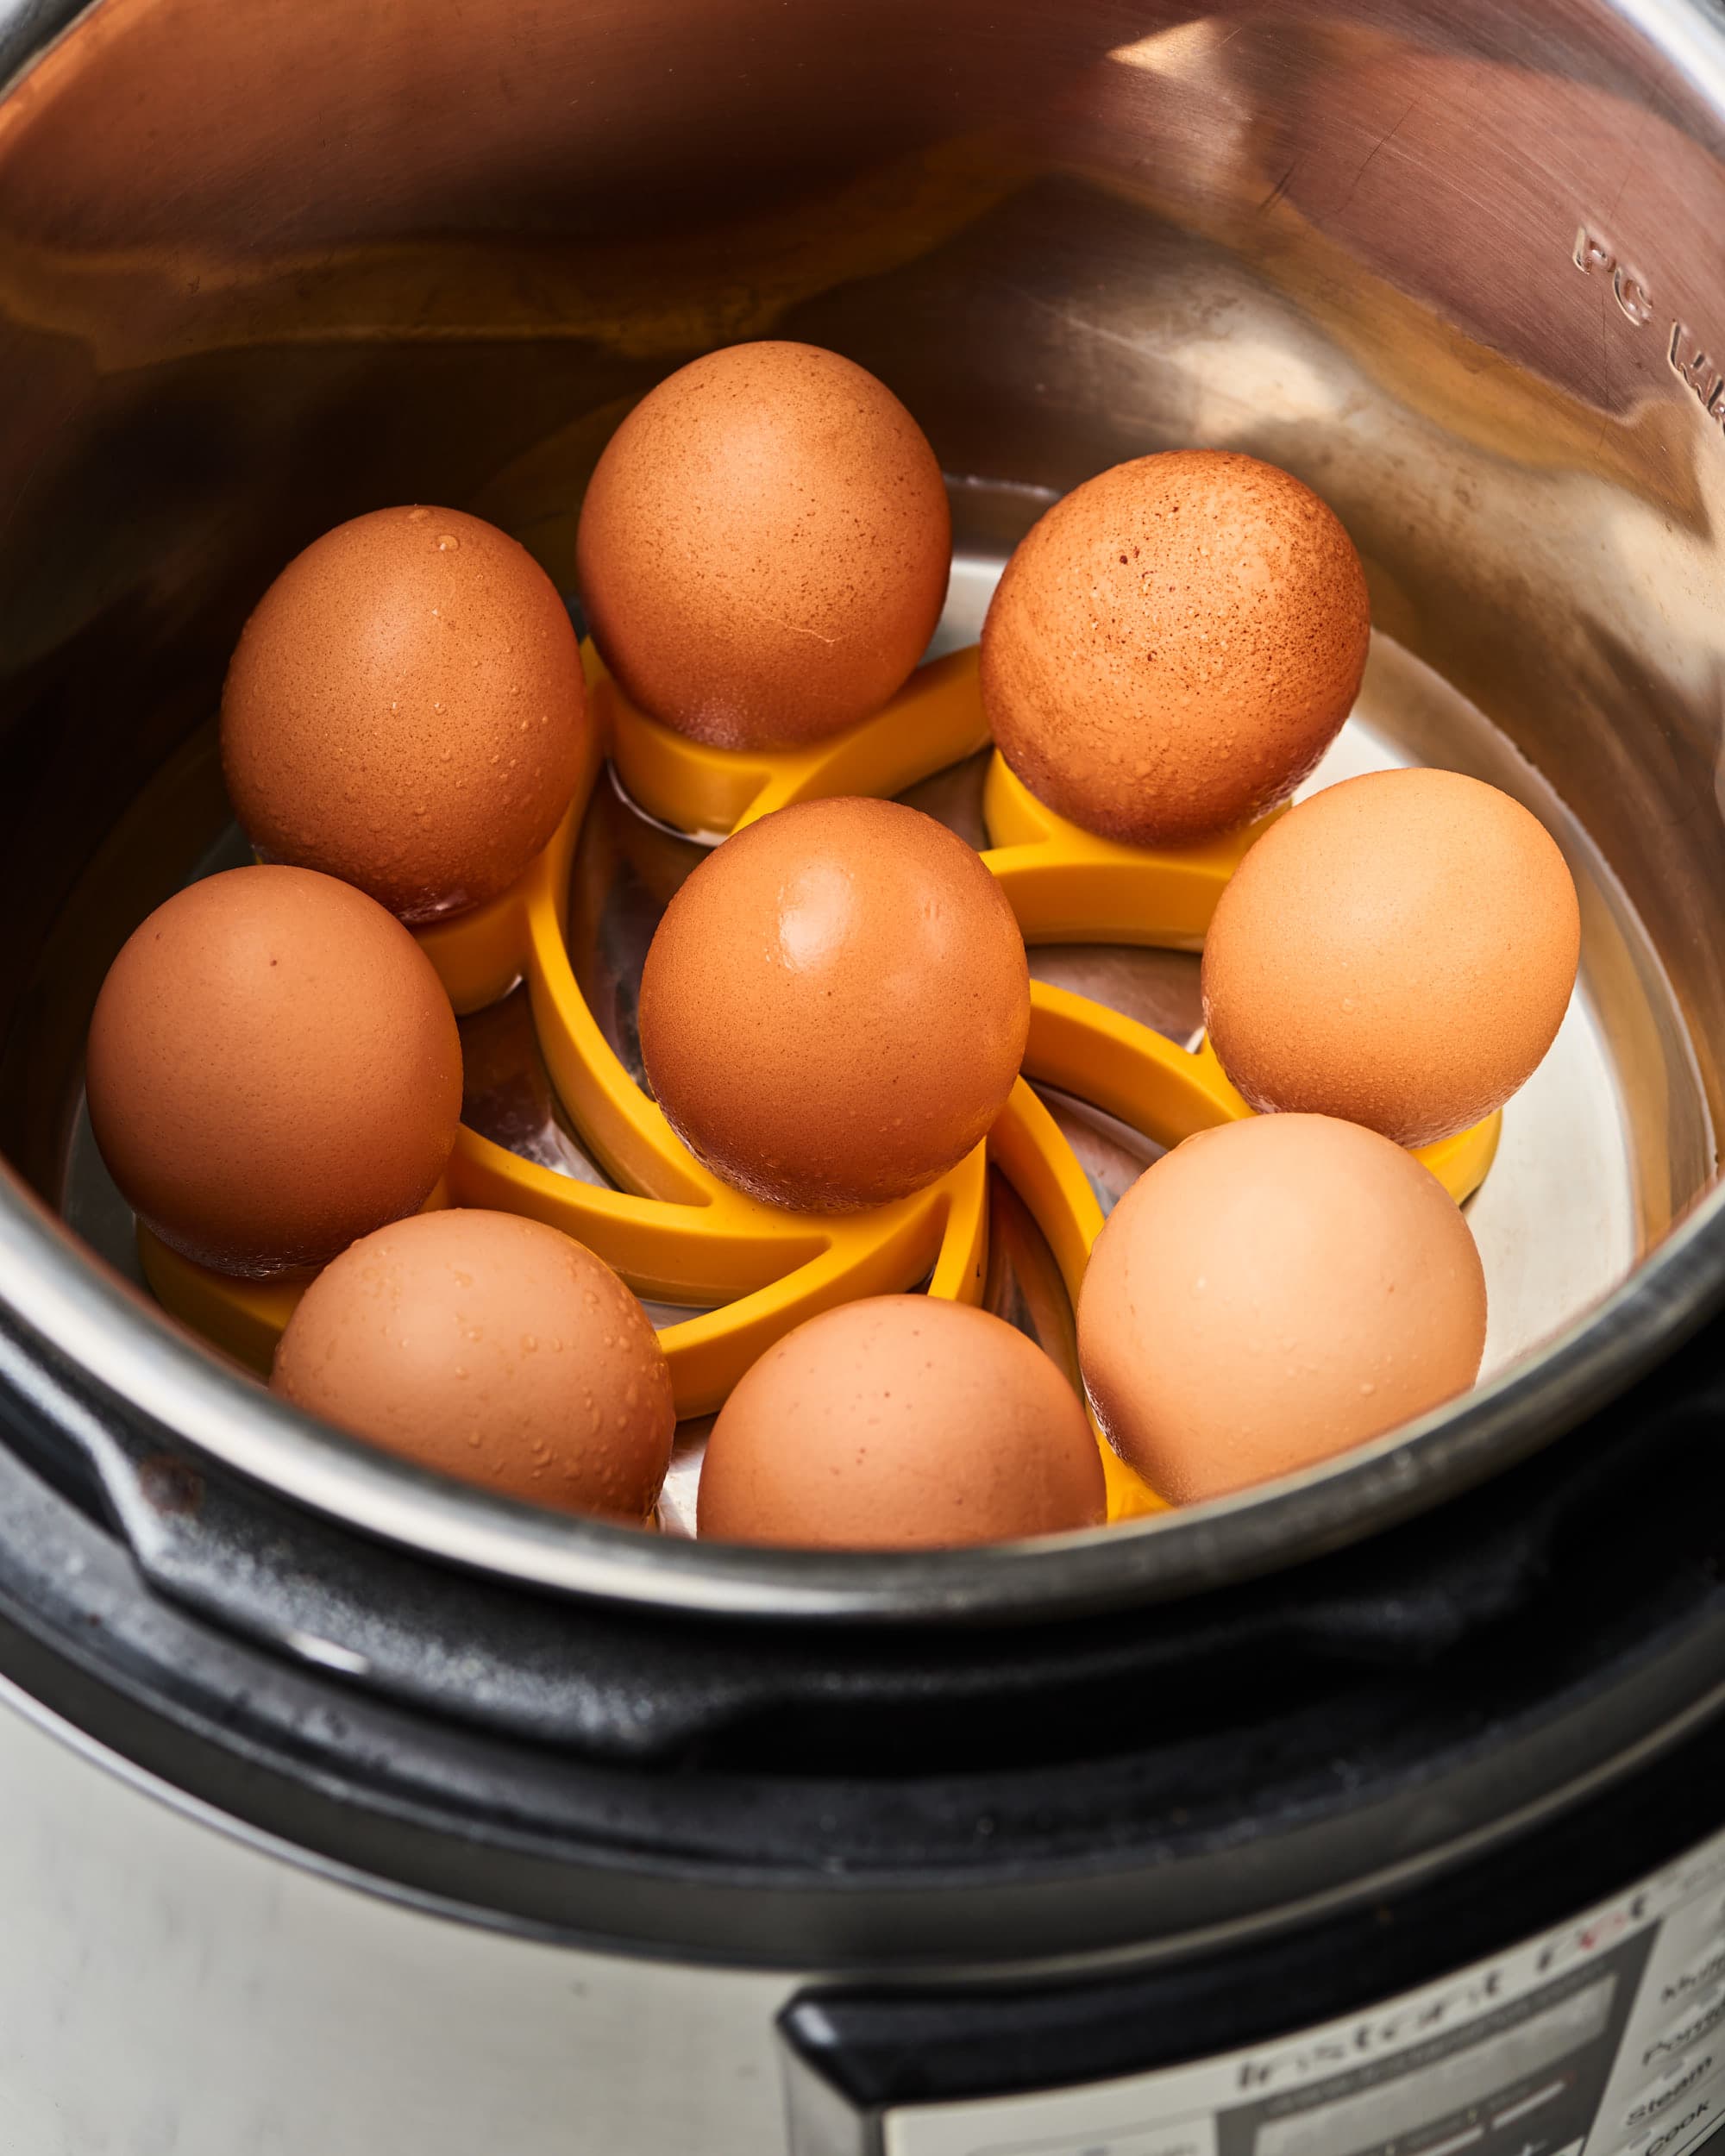 https://cdn.apartmenttherapy.info/image/upload/v1579293954/k/Photo/Recipes/2020-01-Hot-To-Instant-Pot-Hard-Boiled-Eggs/How-to-Make-the-Best-Instant-Pot-Hard-Boiled-Eggs_036.jpg